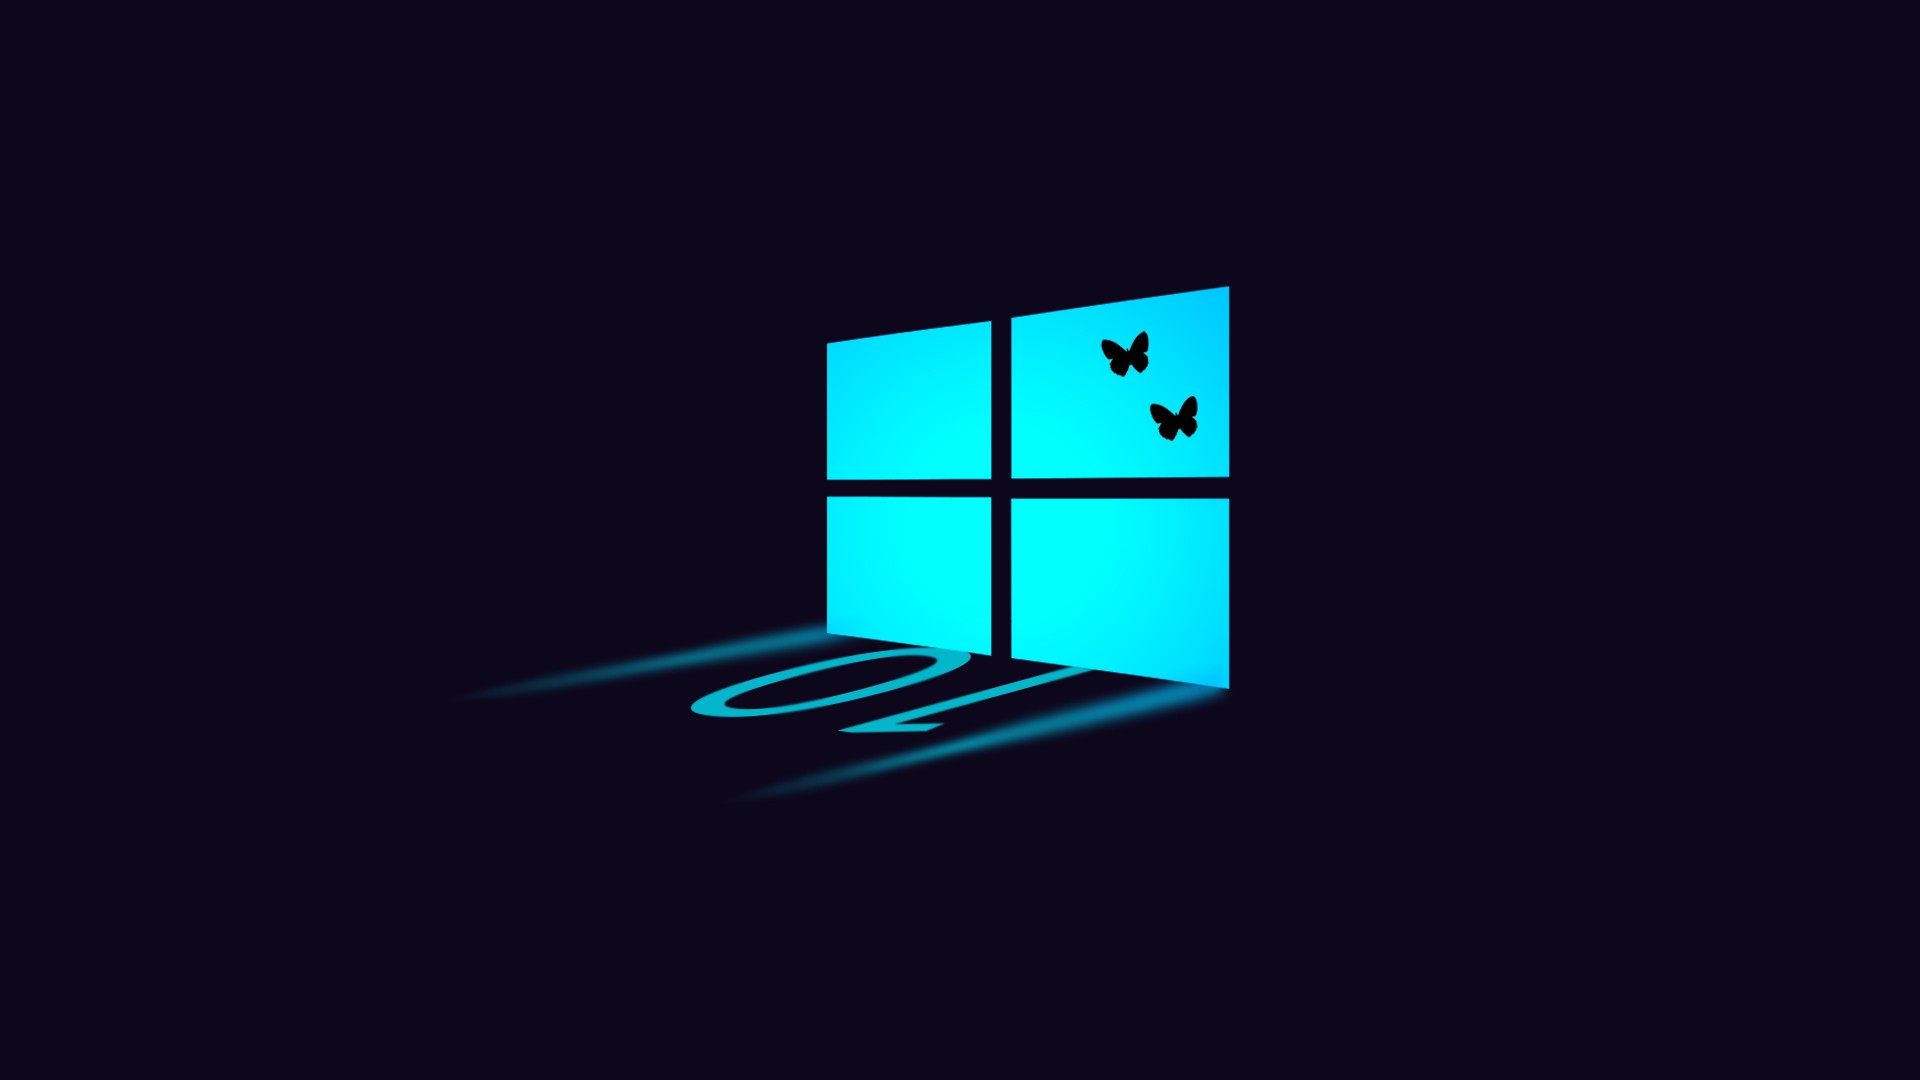 General 1920x1080 Windows 10 Microsoft Microsoft Windows experiments operating system cyan dark background logo simple background